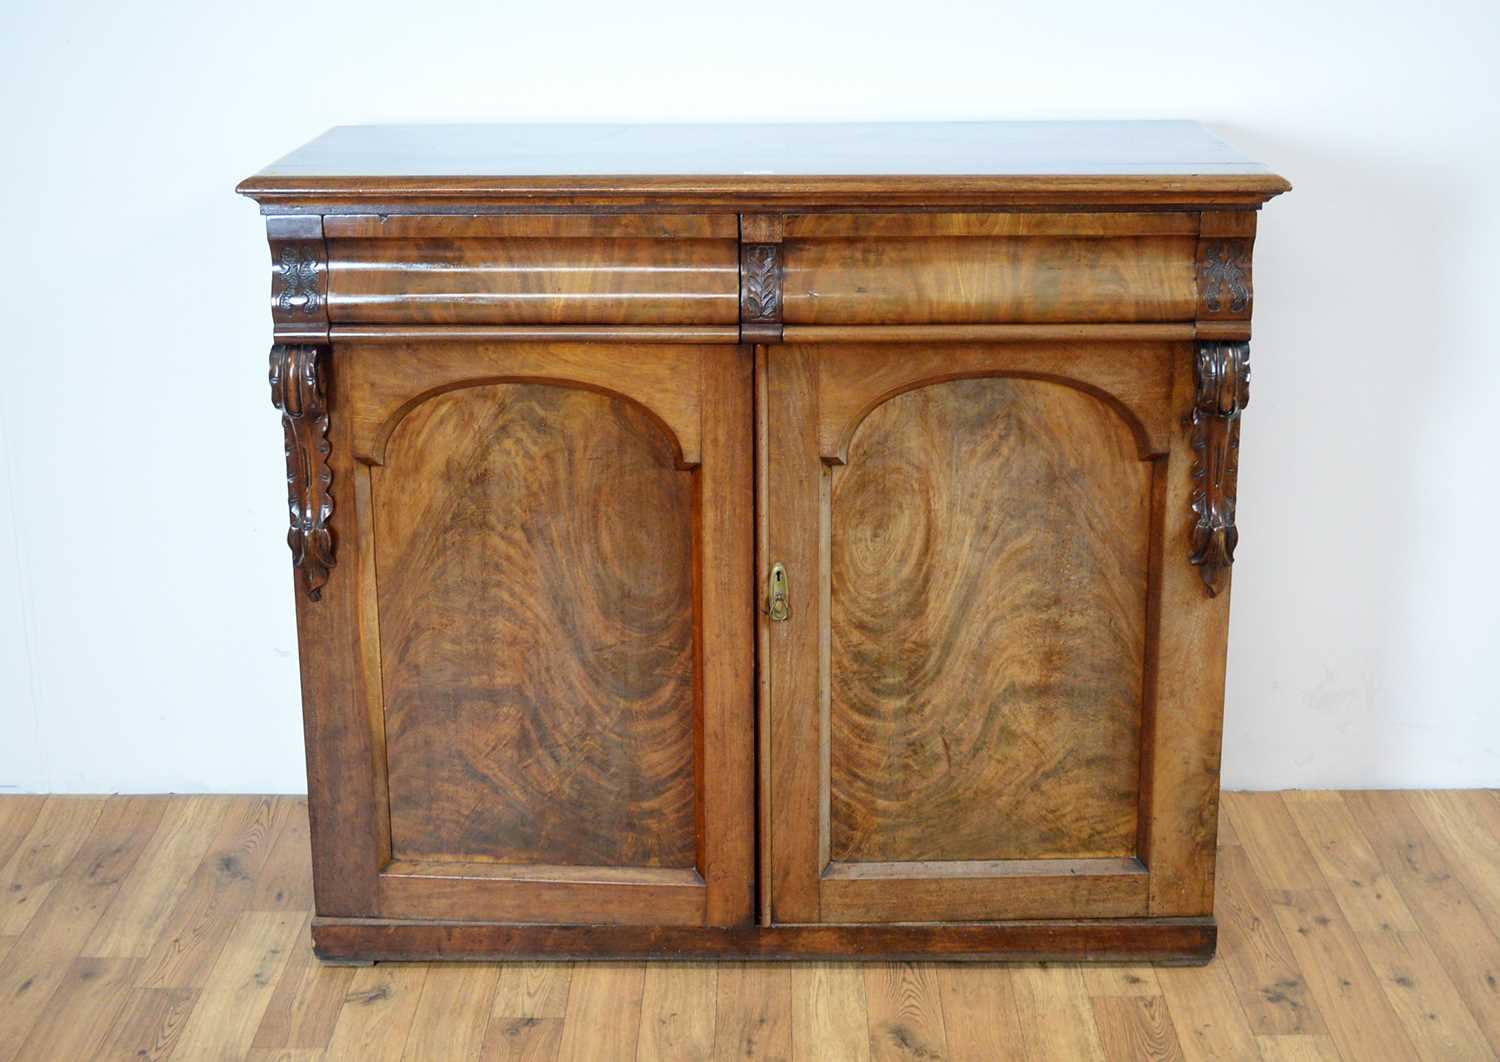 A Victorian mahogany side cabinet